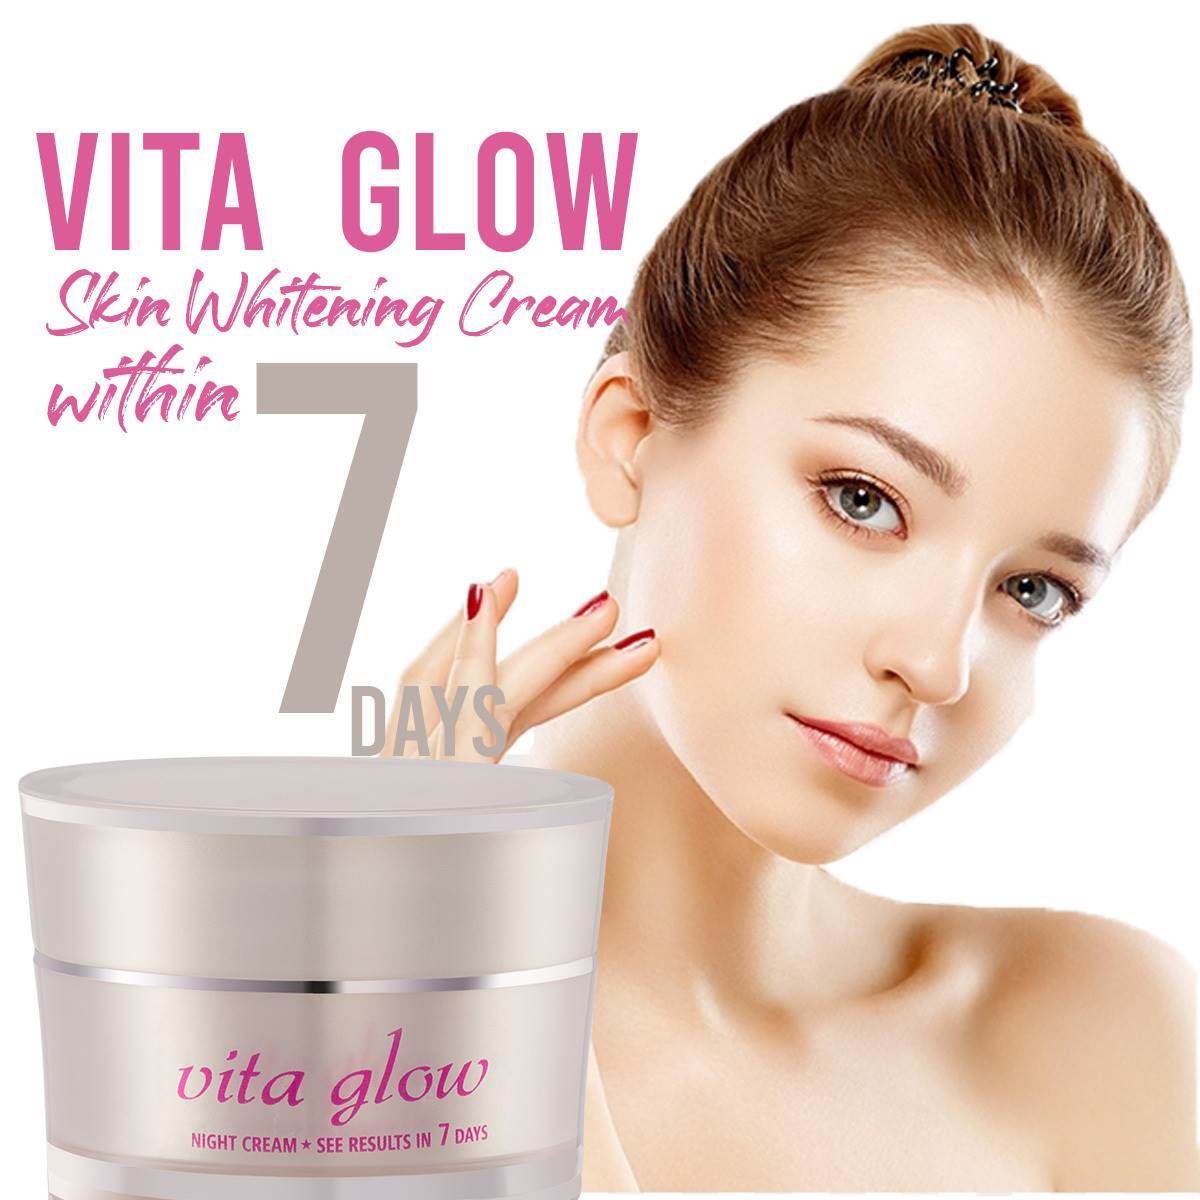 Vita Glow Glutathione Skin Whitening Night Cream Result within 7 days reviews